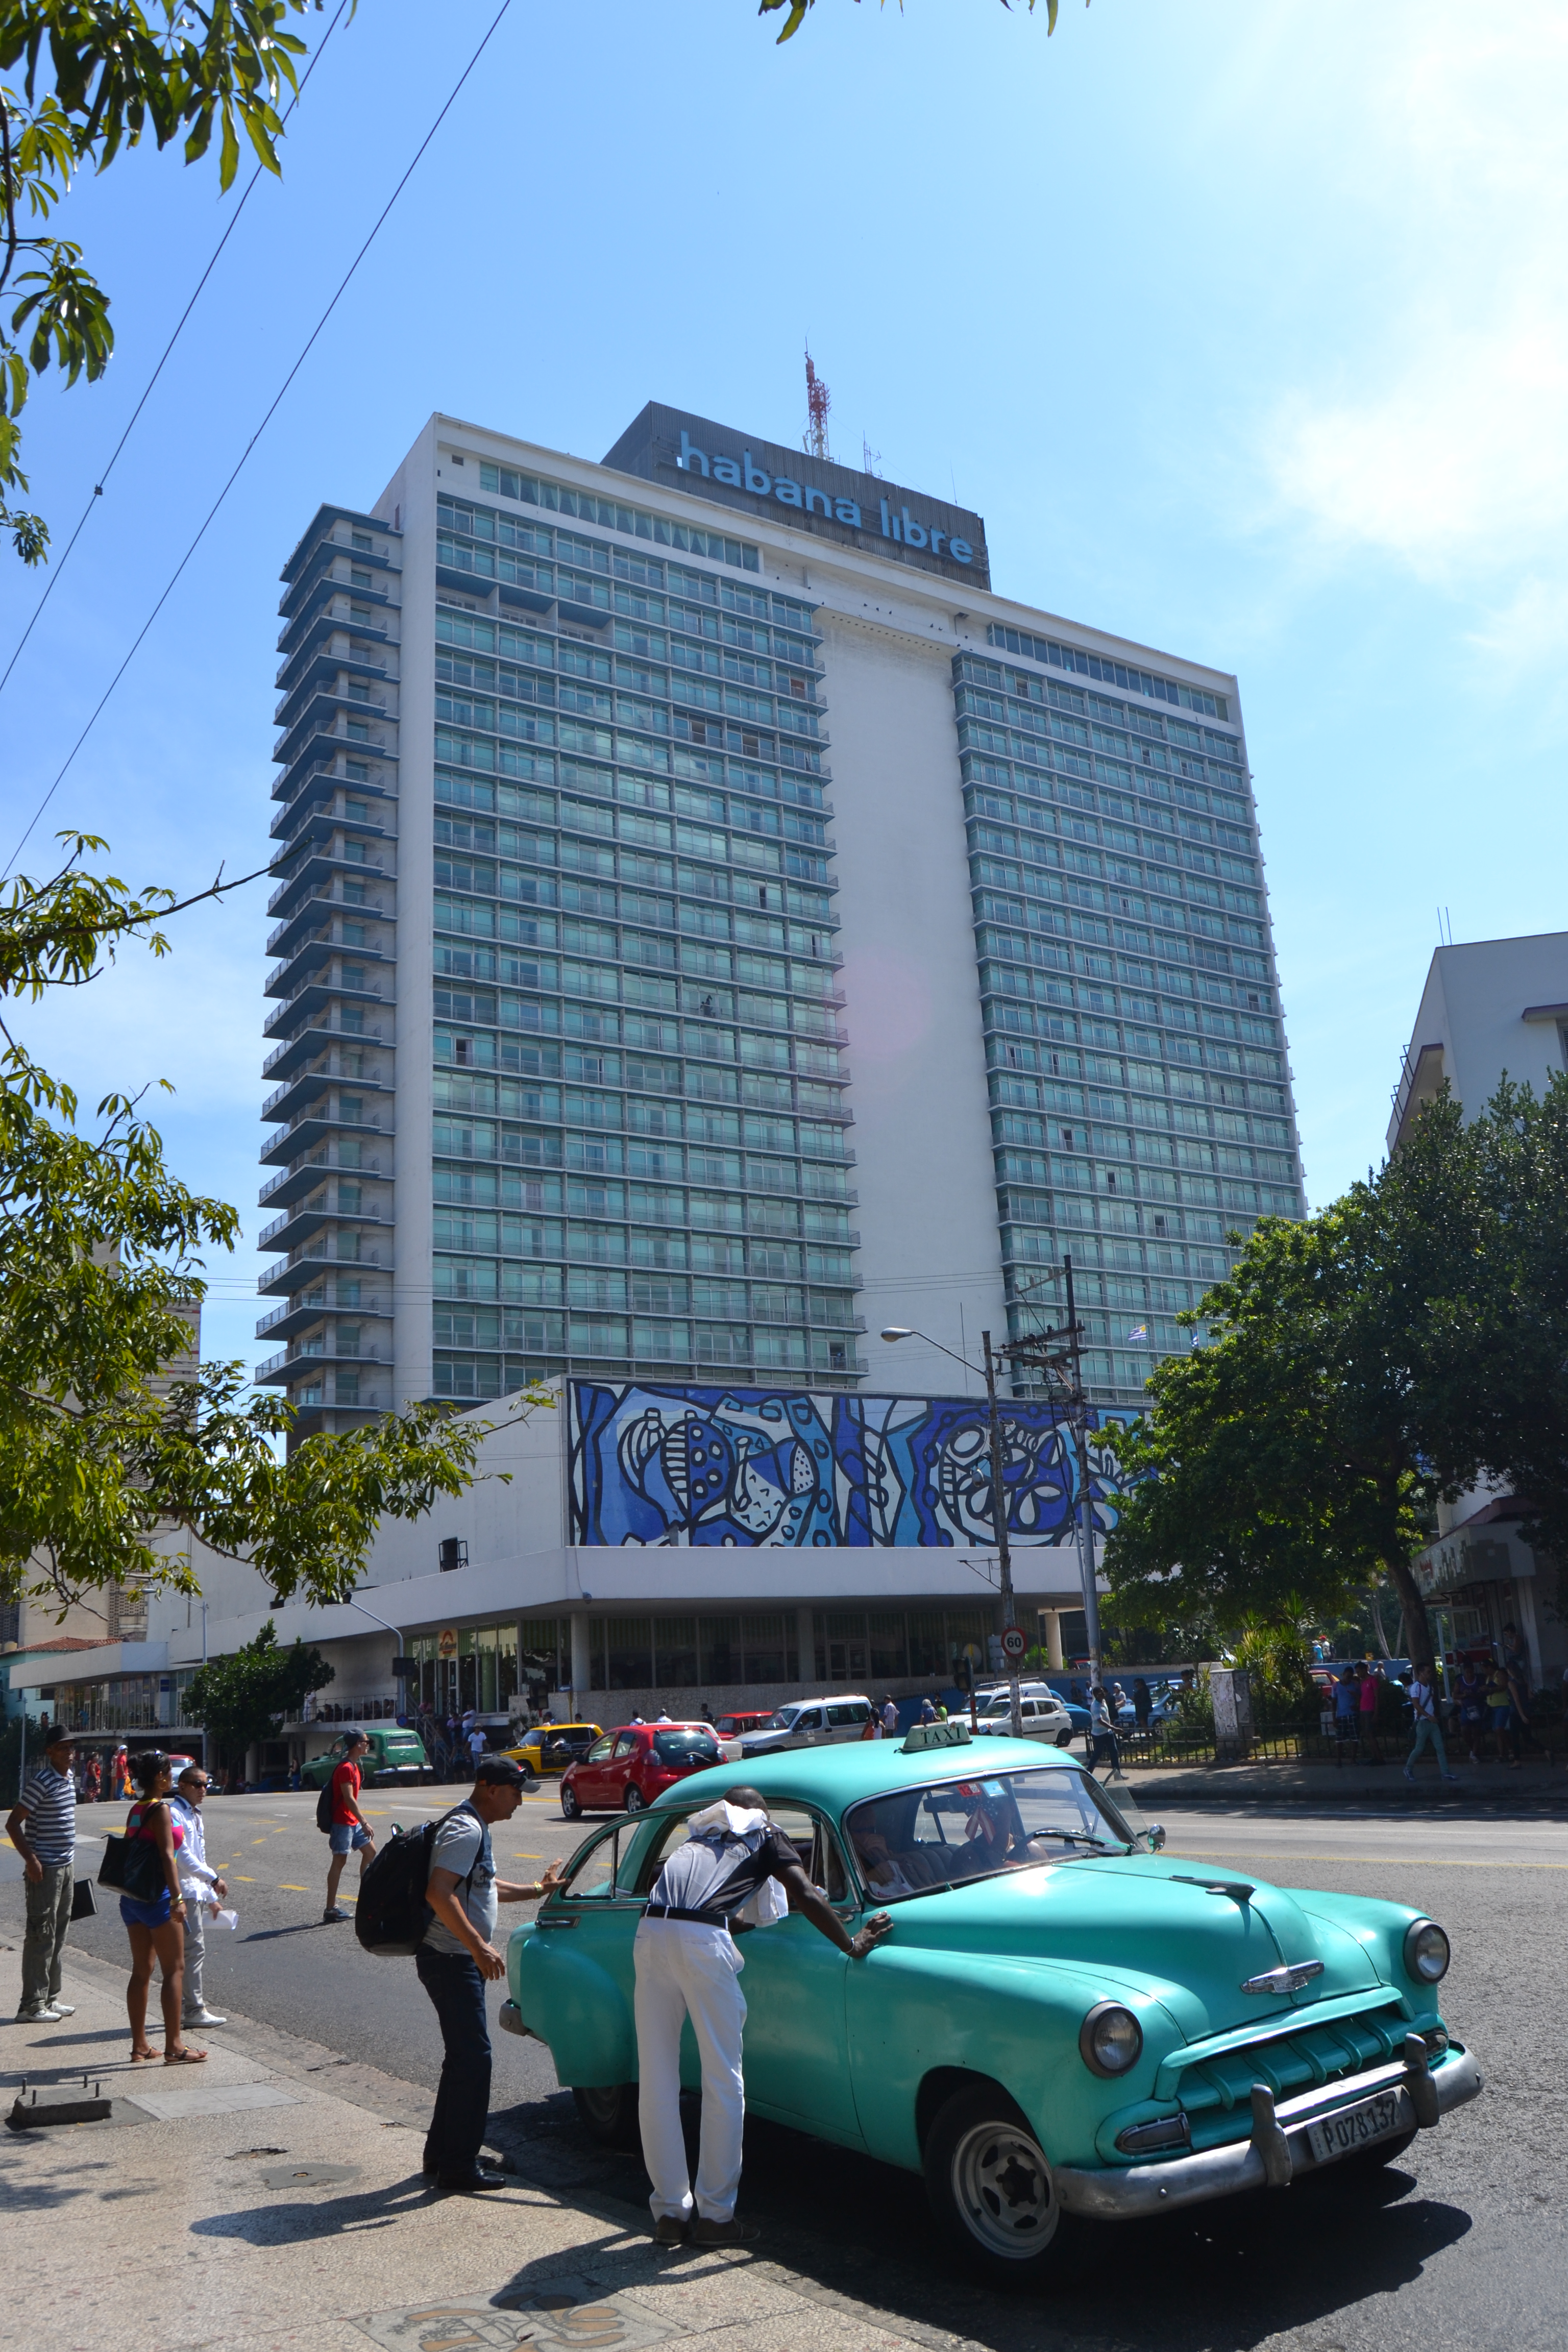 Hotel Habana Libre, La Habana, Cuba